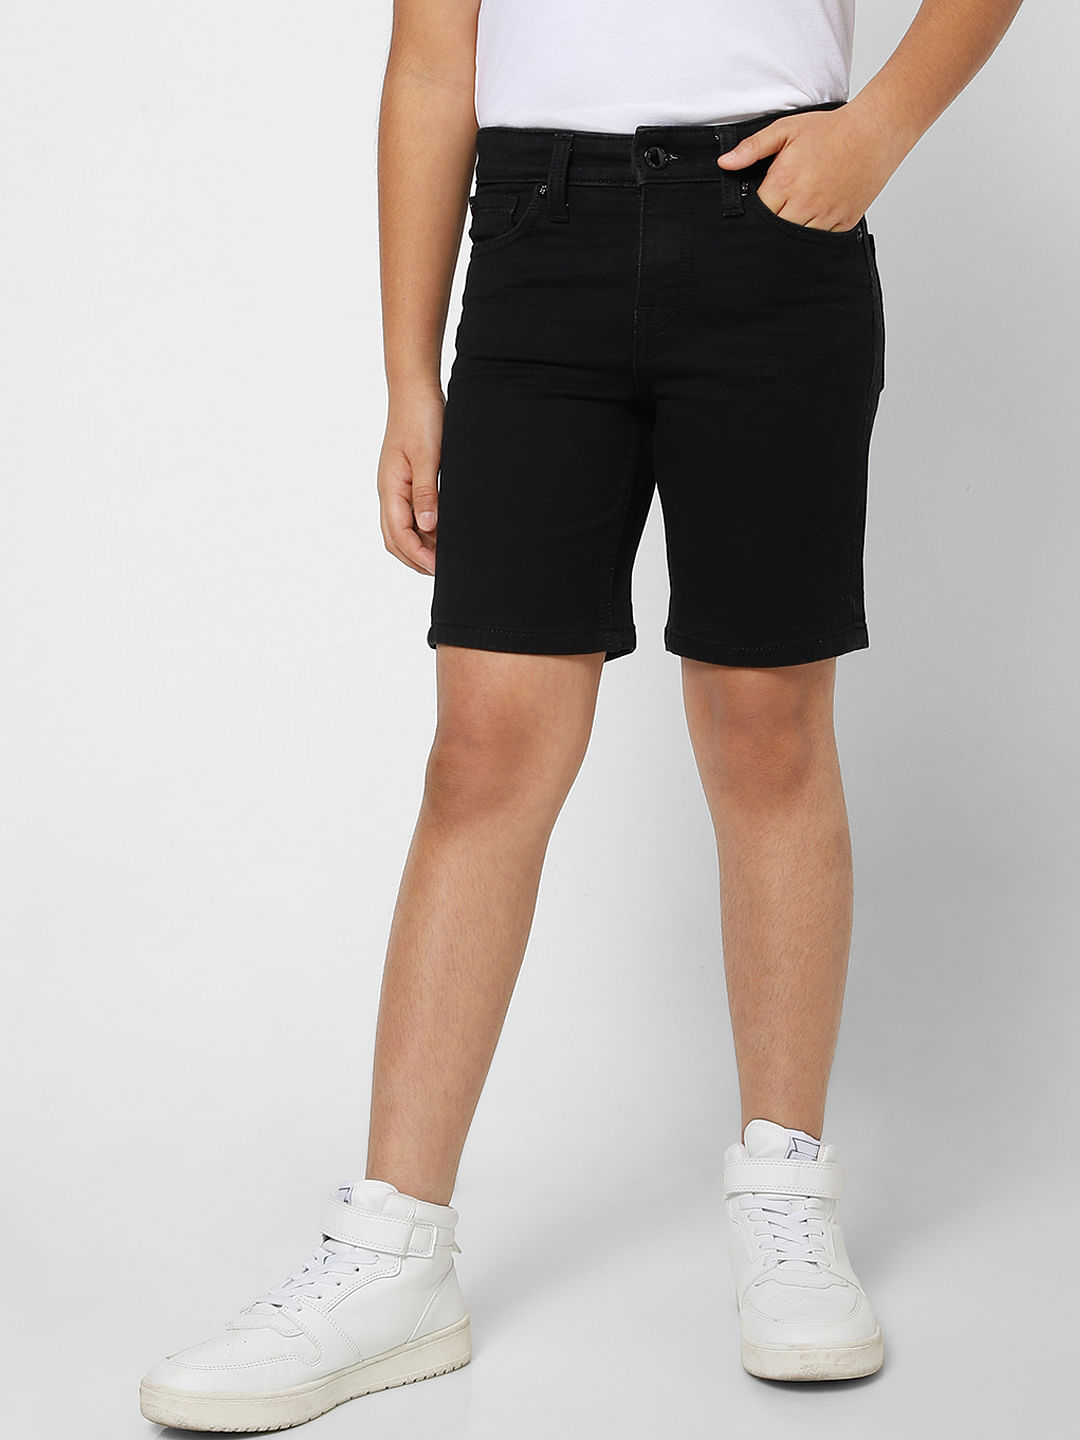 Women's Shorts on Sale | Aeropostale